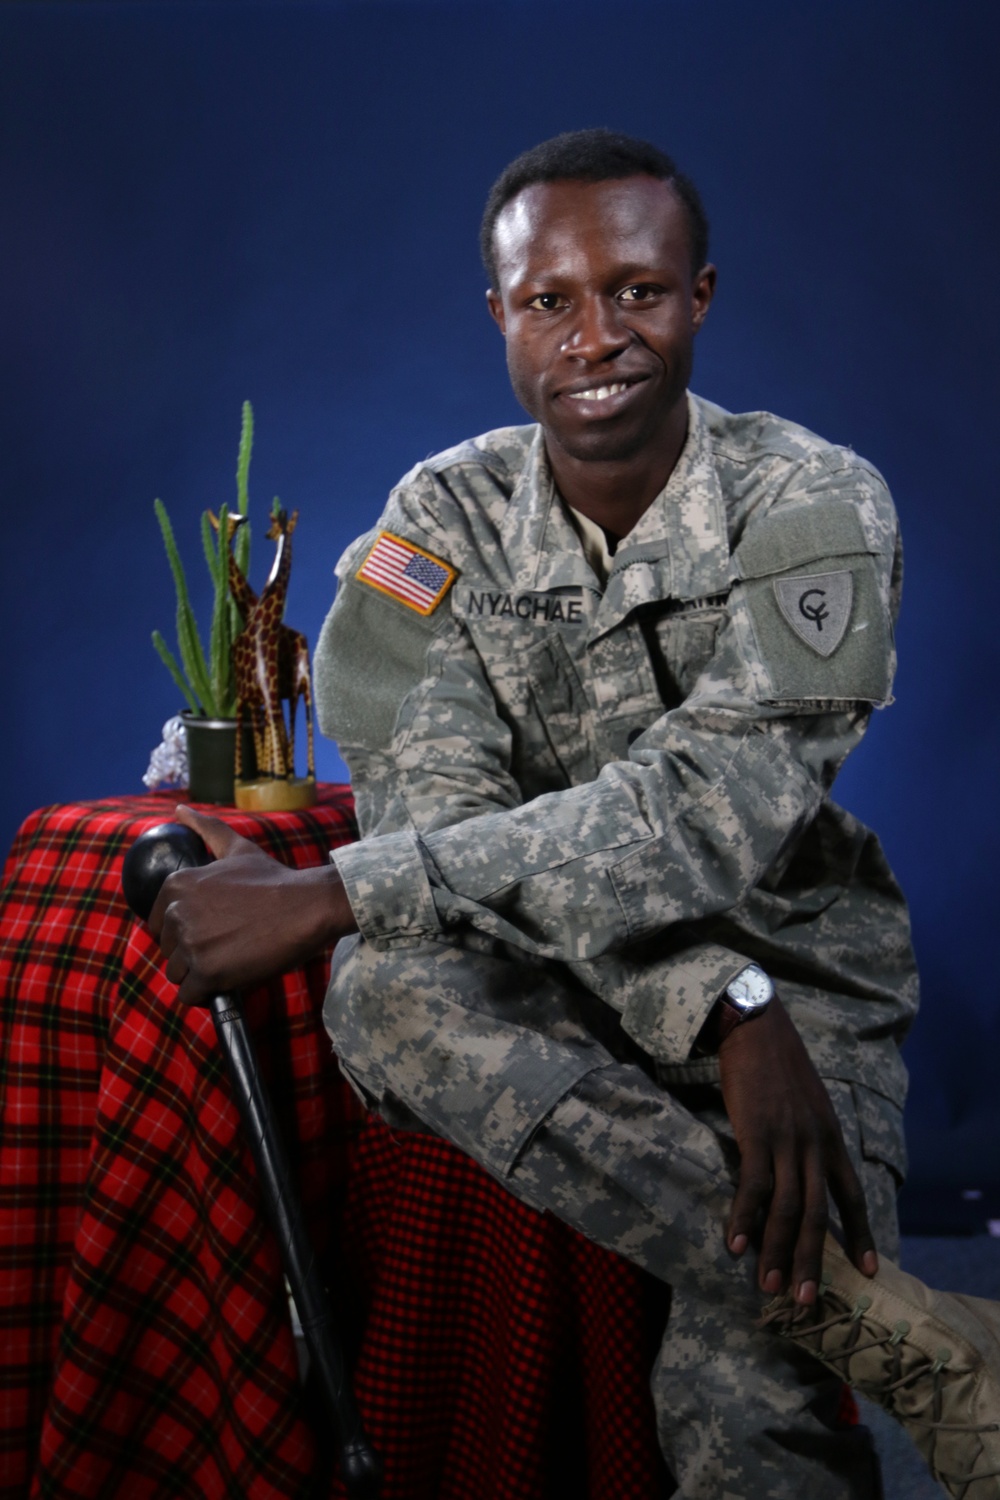 OCelebrating African-American/Black History Month: Humble beginnings, big goals for Ohio National Guard member from Kenya